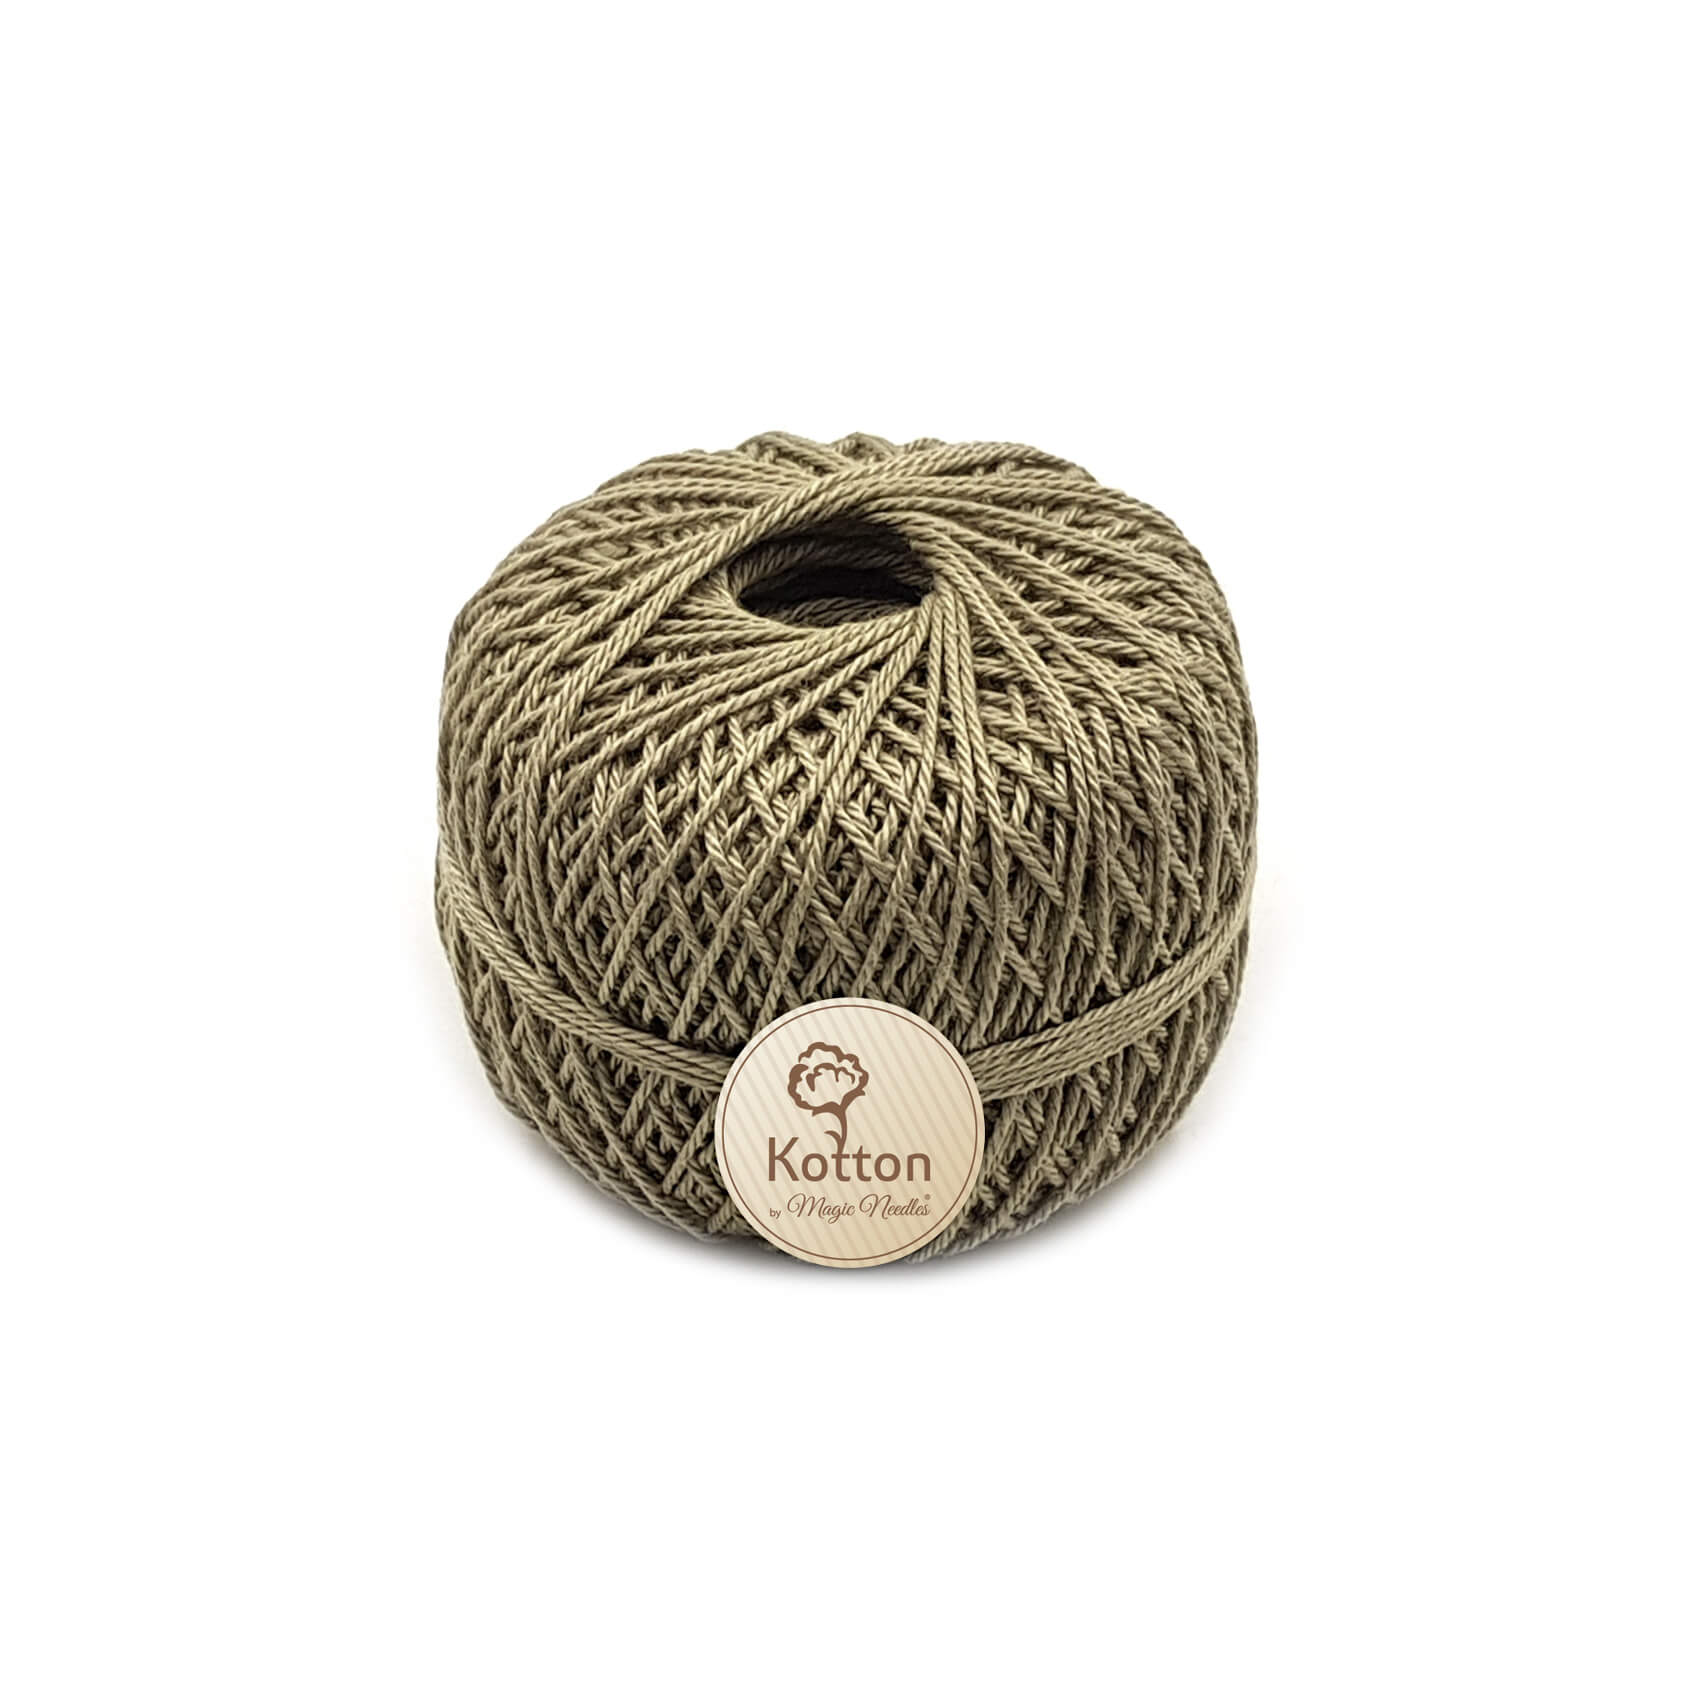 Kotton 3 ply Mercerised Cotton Yarn - Fawn 19